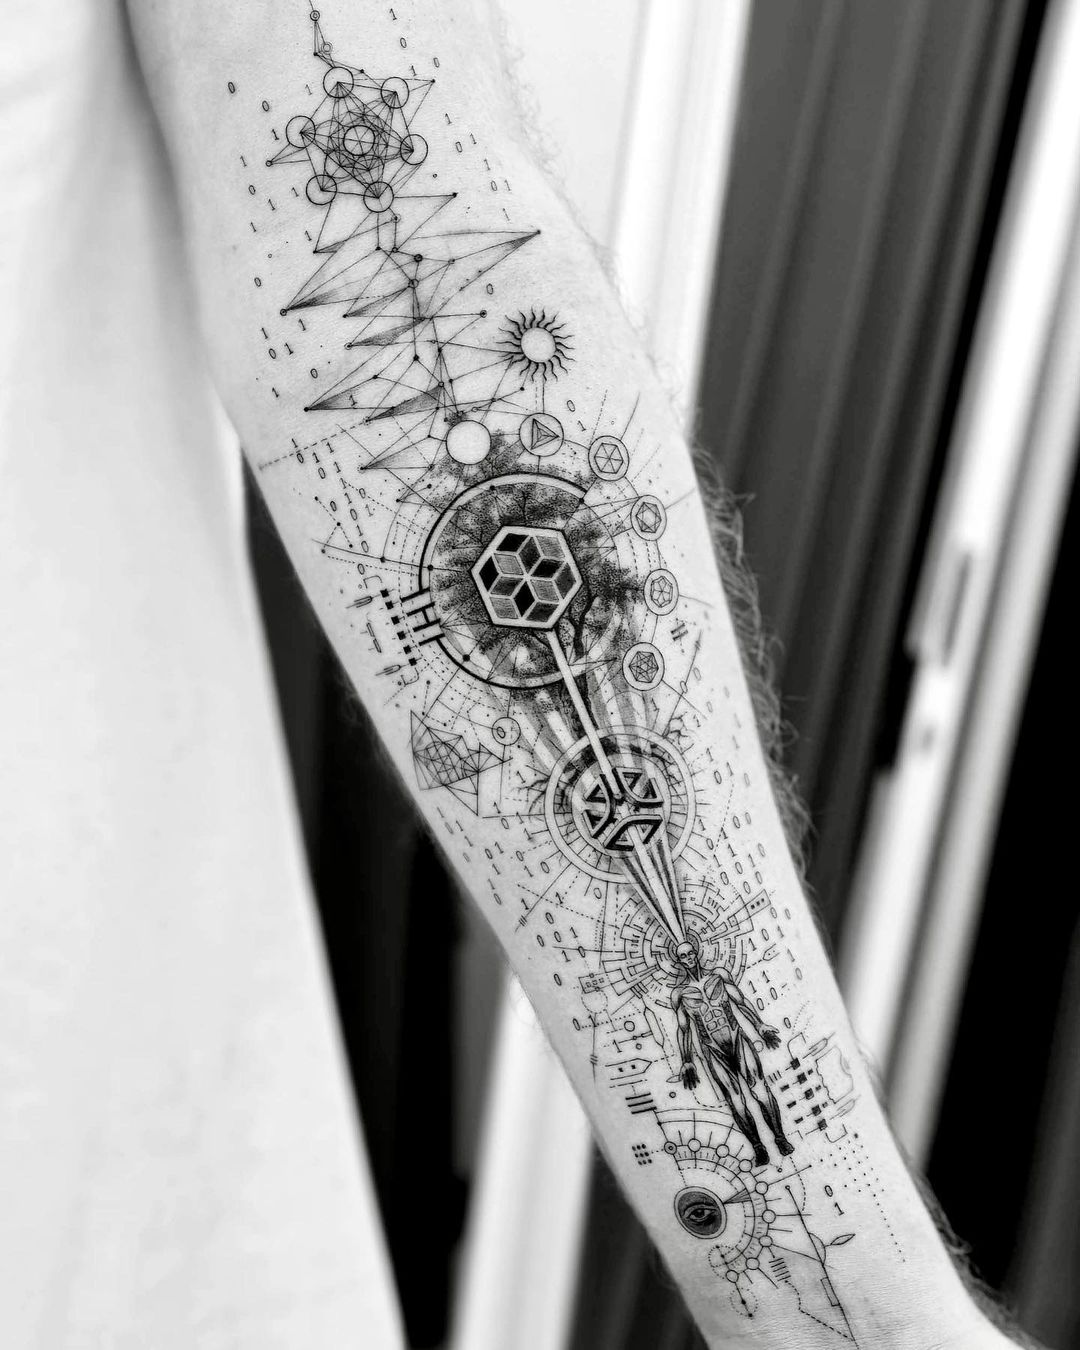 Forearm Tattoo Geometry - Best Tattoo Ideas Gallery